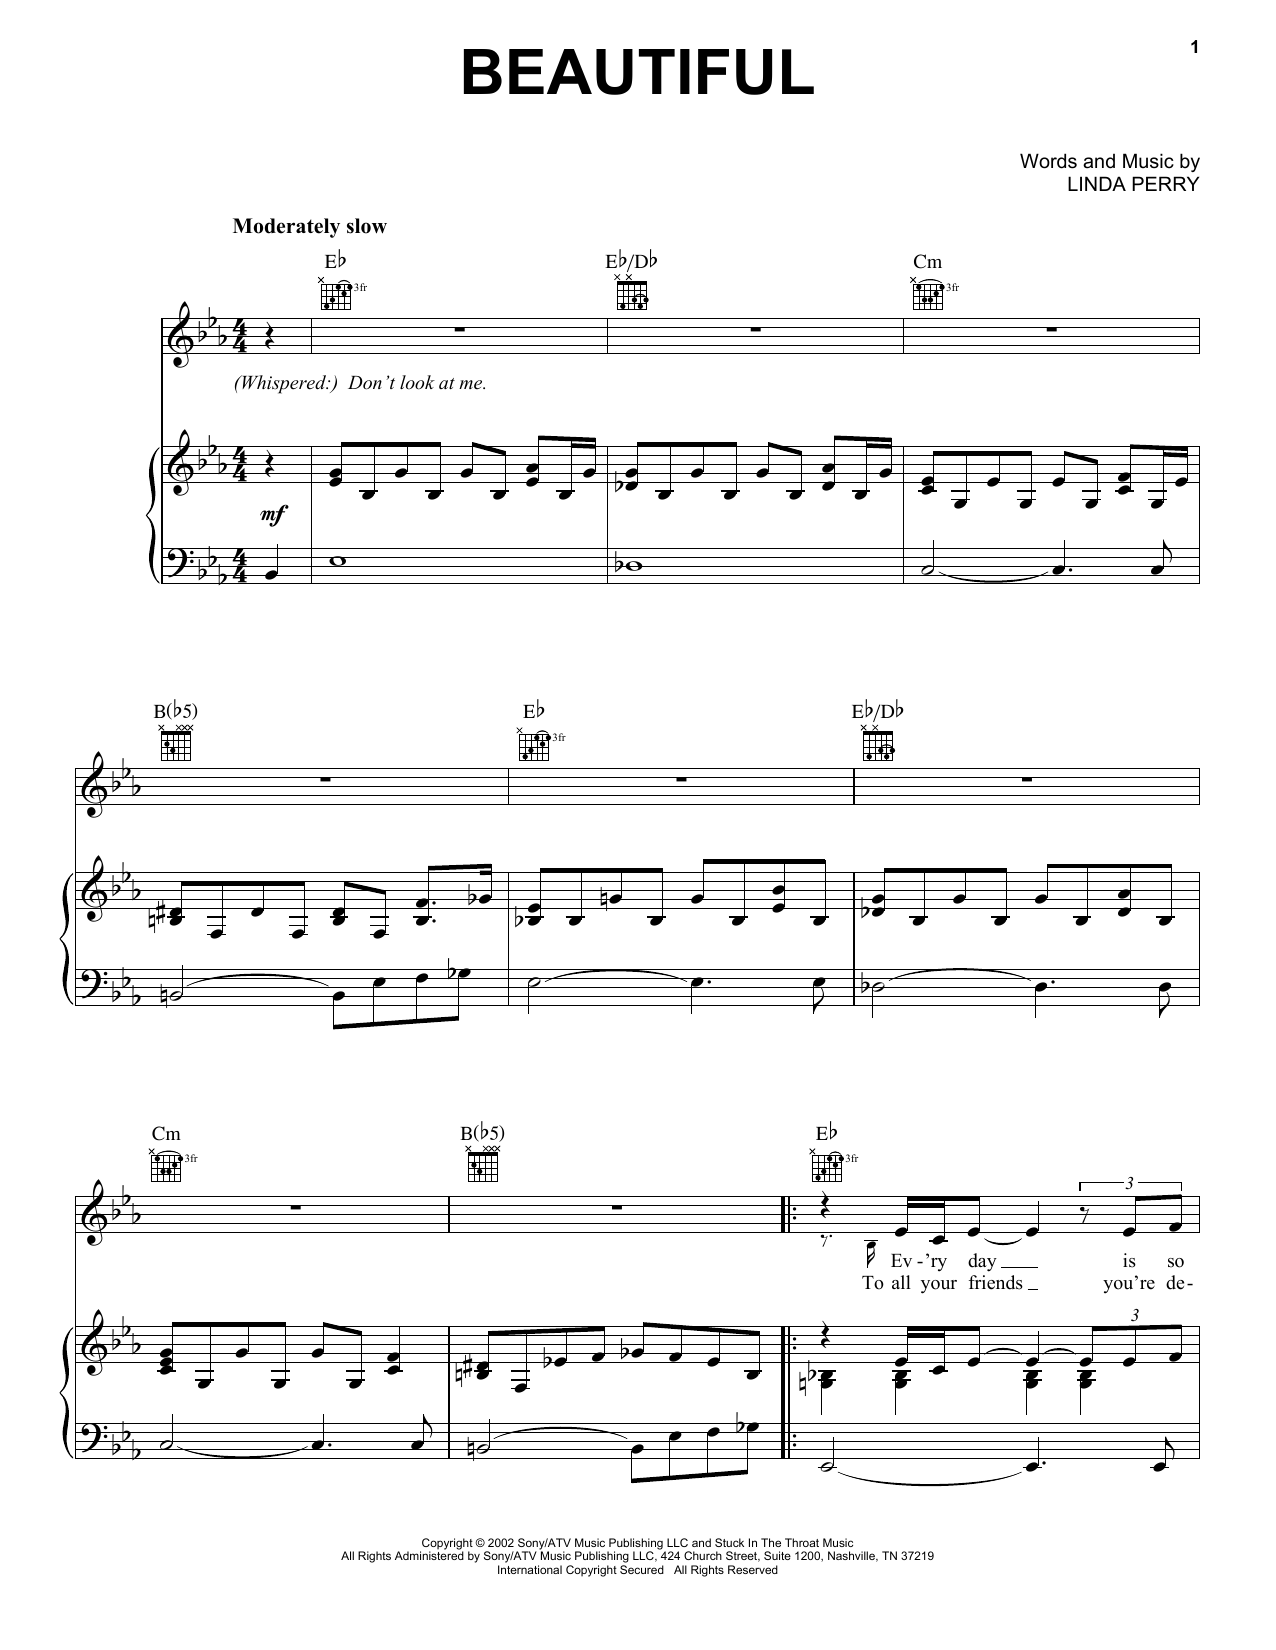 Christina Aguilera Beautiful Sheet Music Notes & Chords for Piano - Download or Print PDF